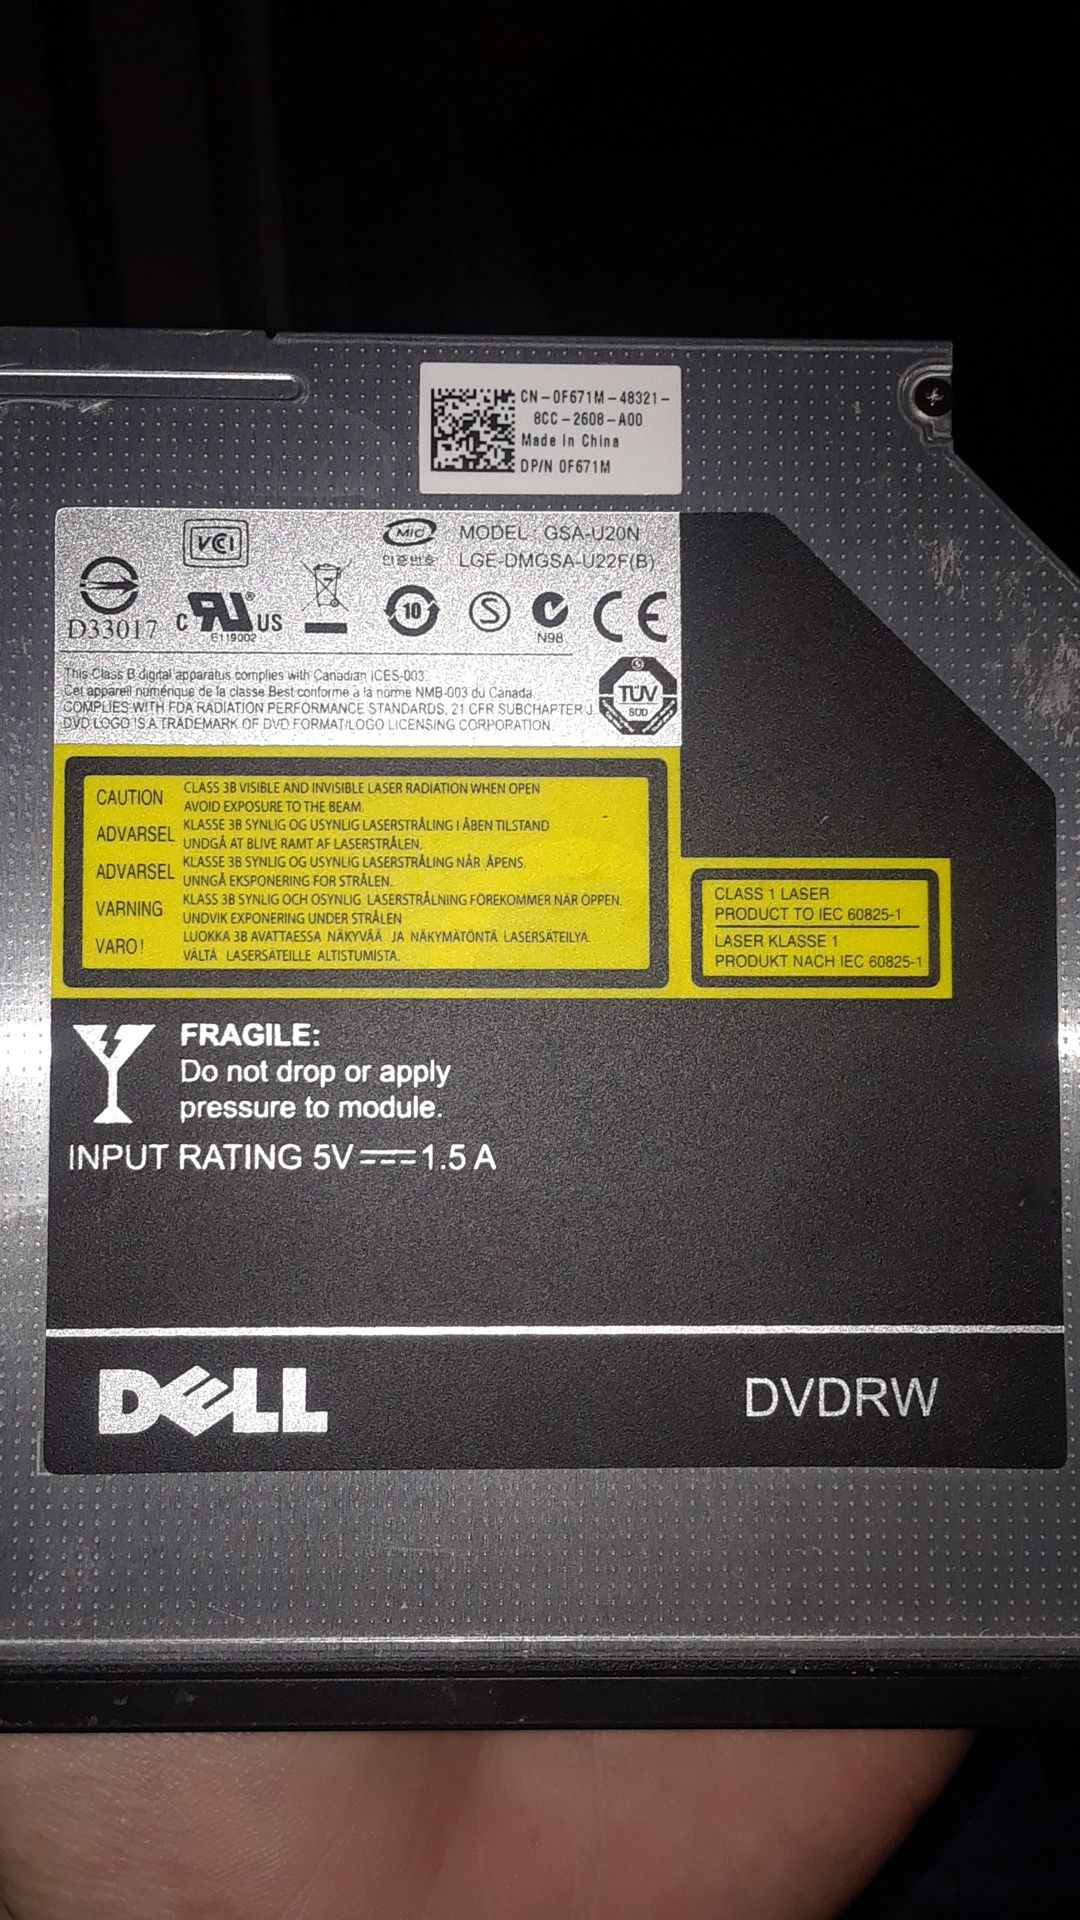 Dell DVDRW (internal)